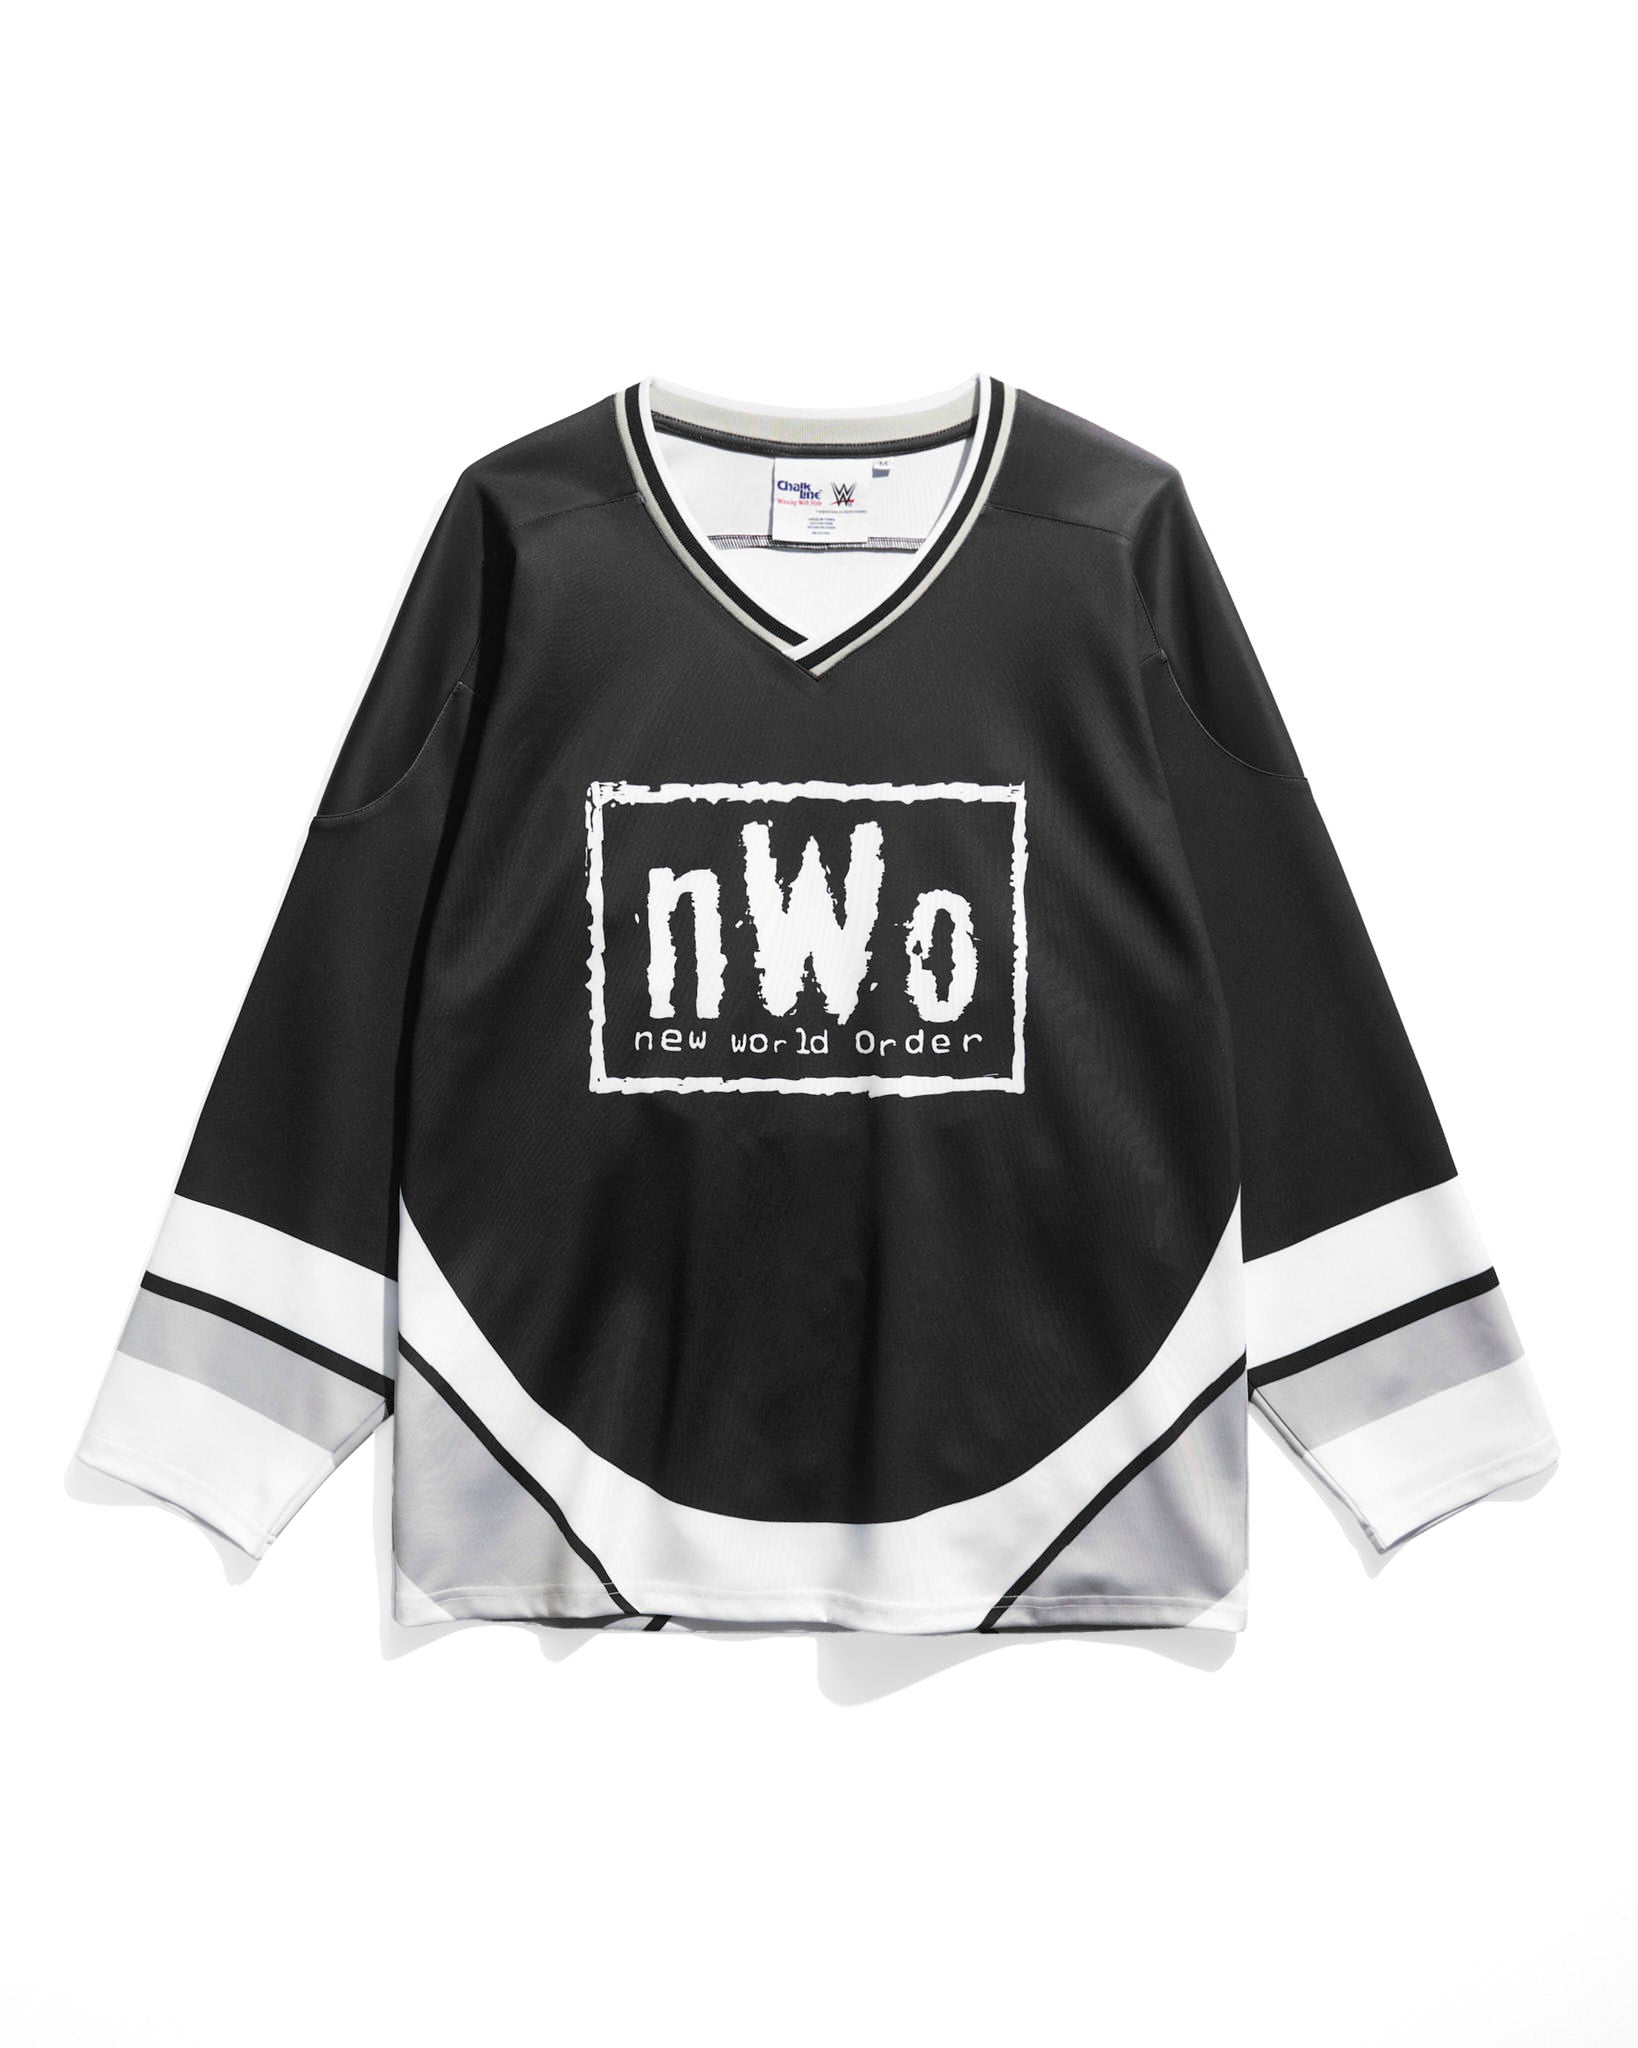 Grey / Black LA Style Hockey Jersey